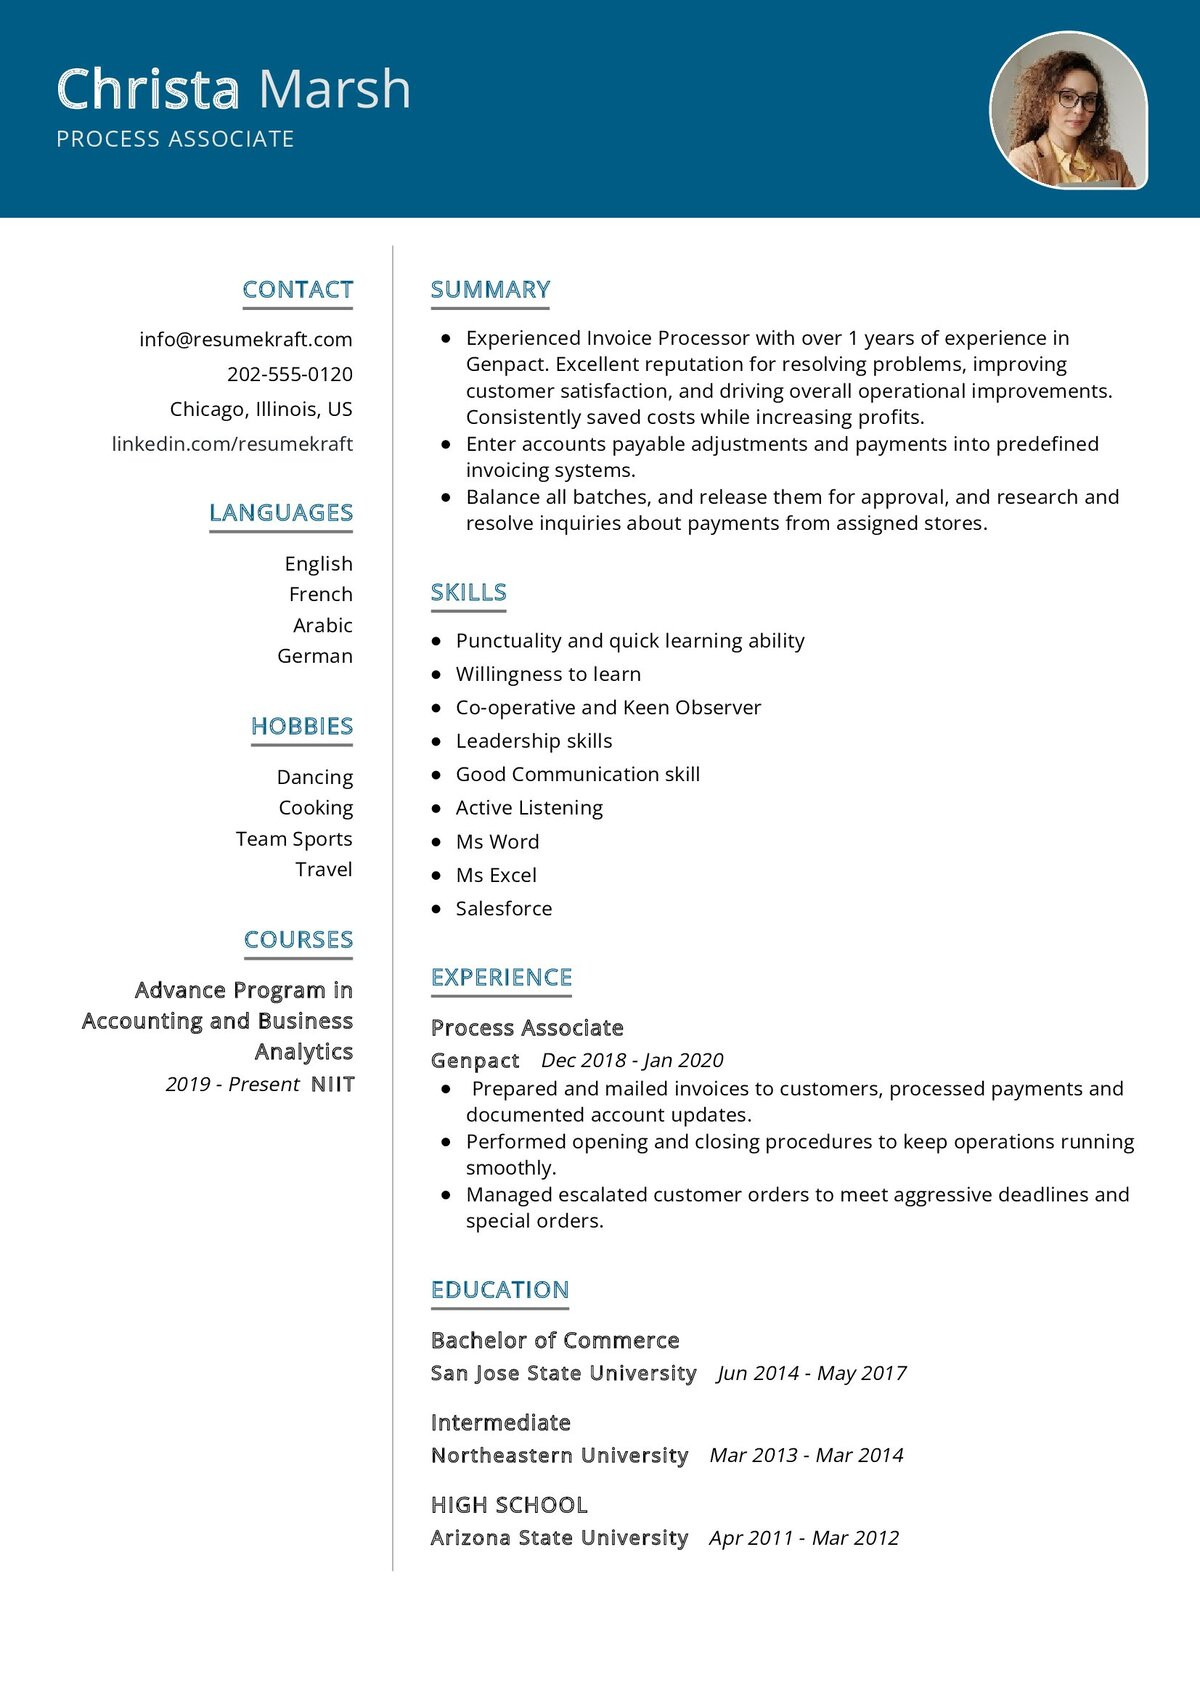 Sample Resume for Business Process associate Process associate Resume Sample 2022 Writing Tips – Resumekraft